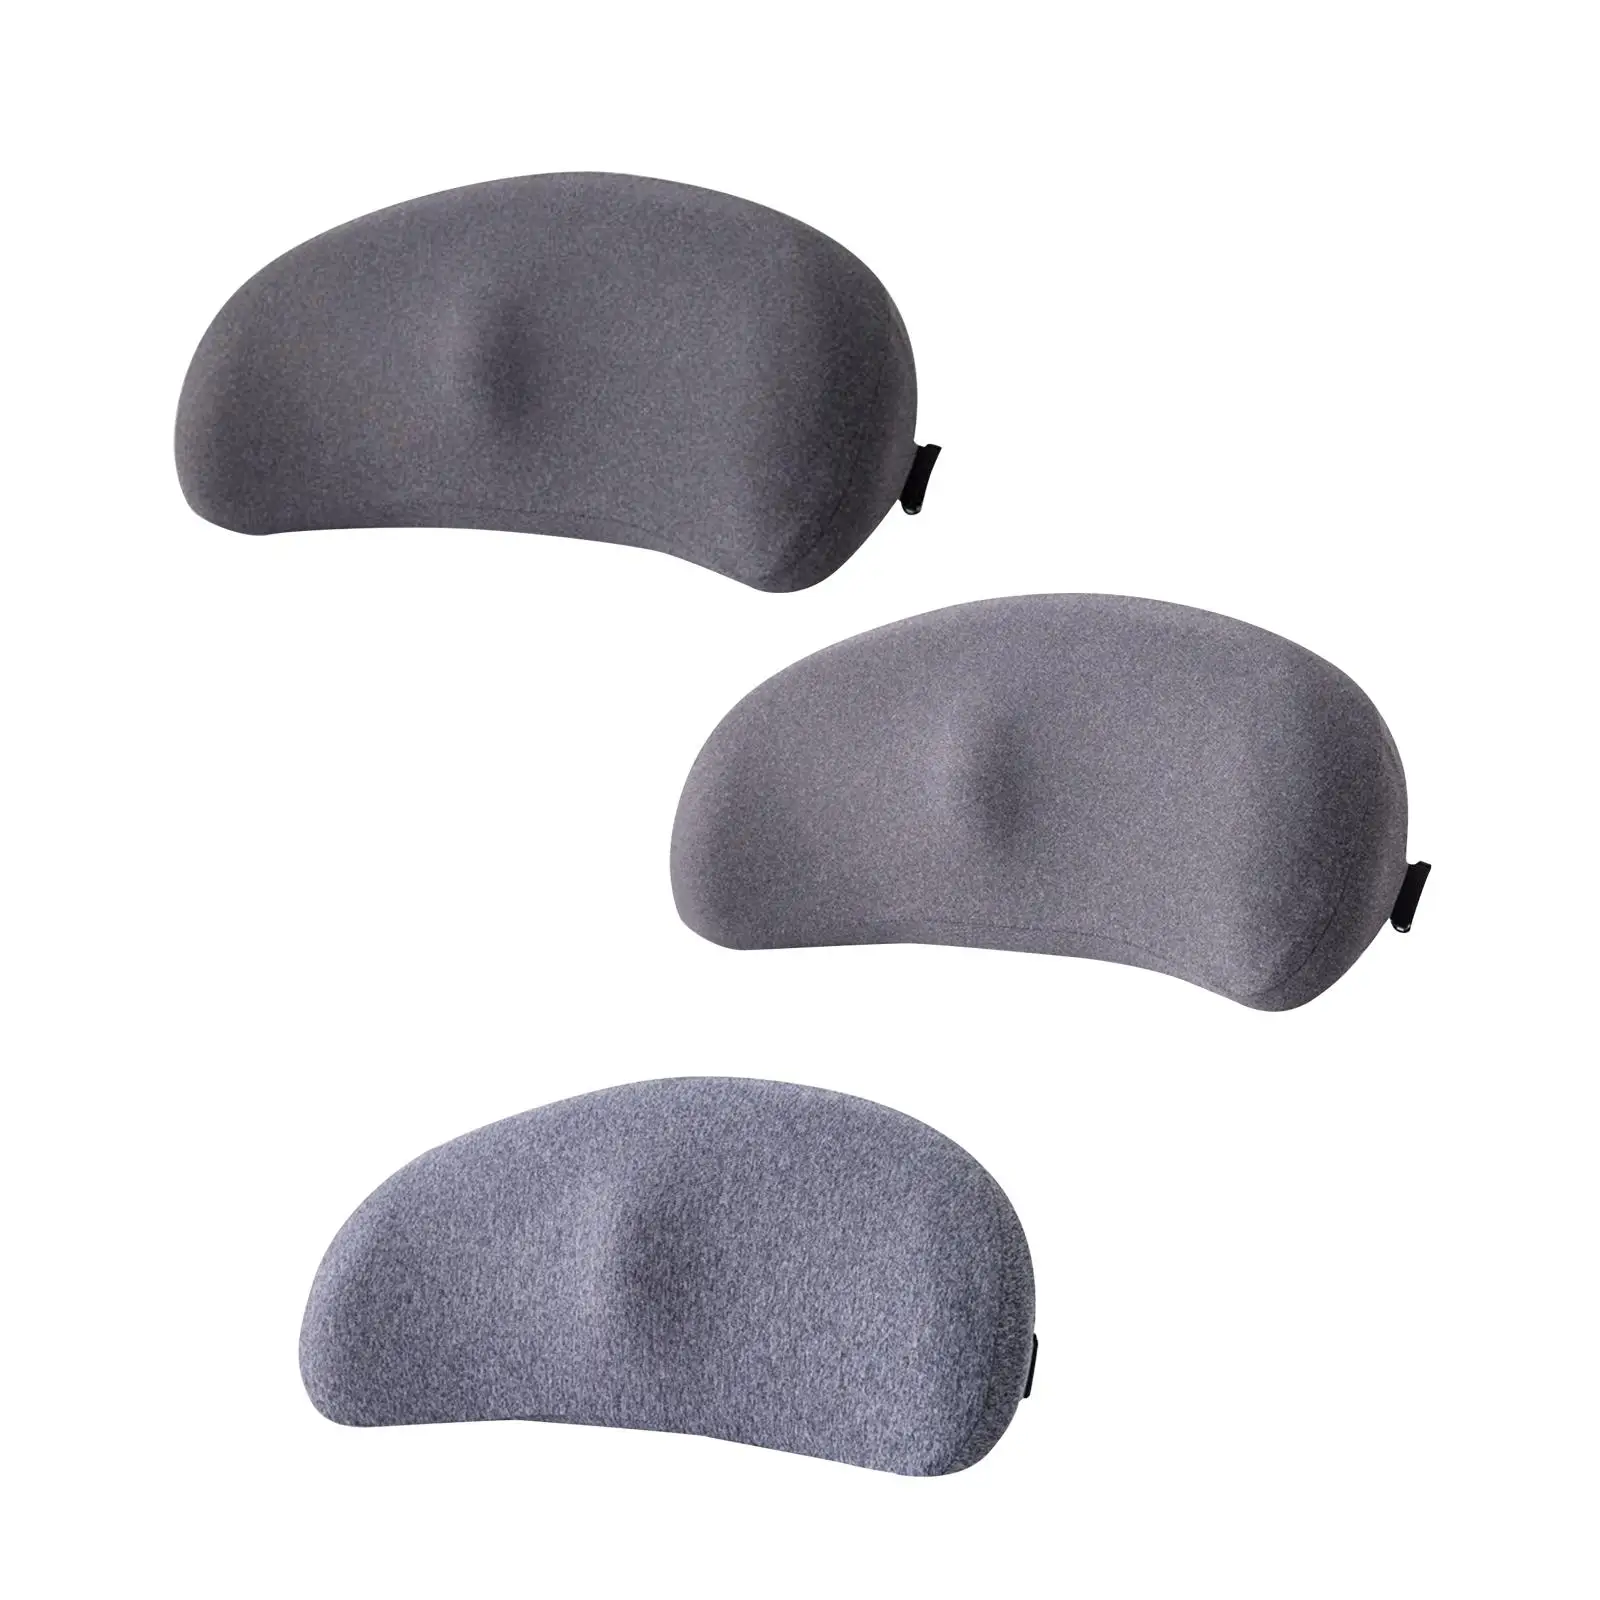 Lower Back Cushion Multipurpose Memory Foam Ergonomic Lumbar Support Pillow for recliner Home Travel Sleeping Rest Car Driver